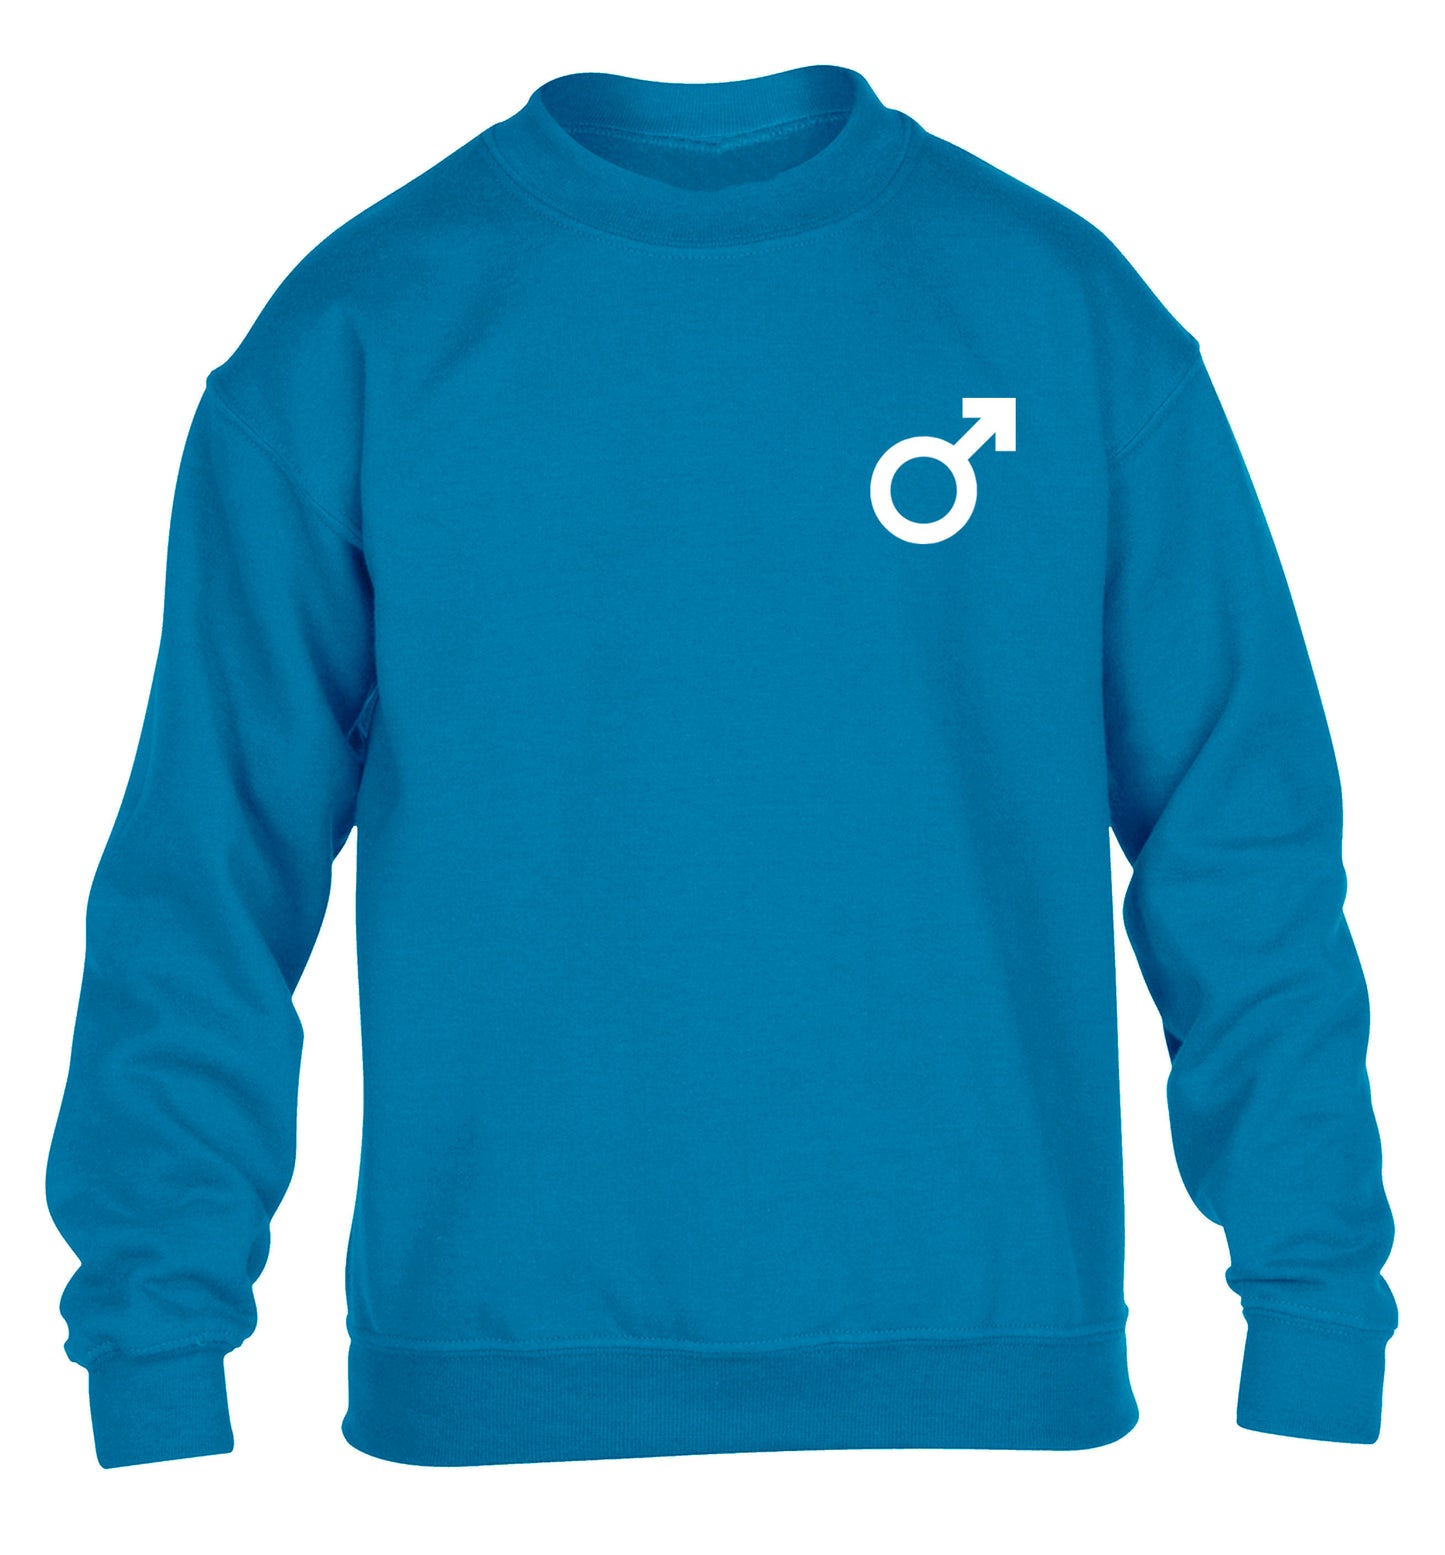 Male symbol pocket children's blue sweater 12-14 Years